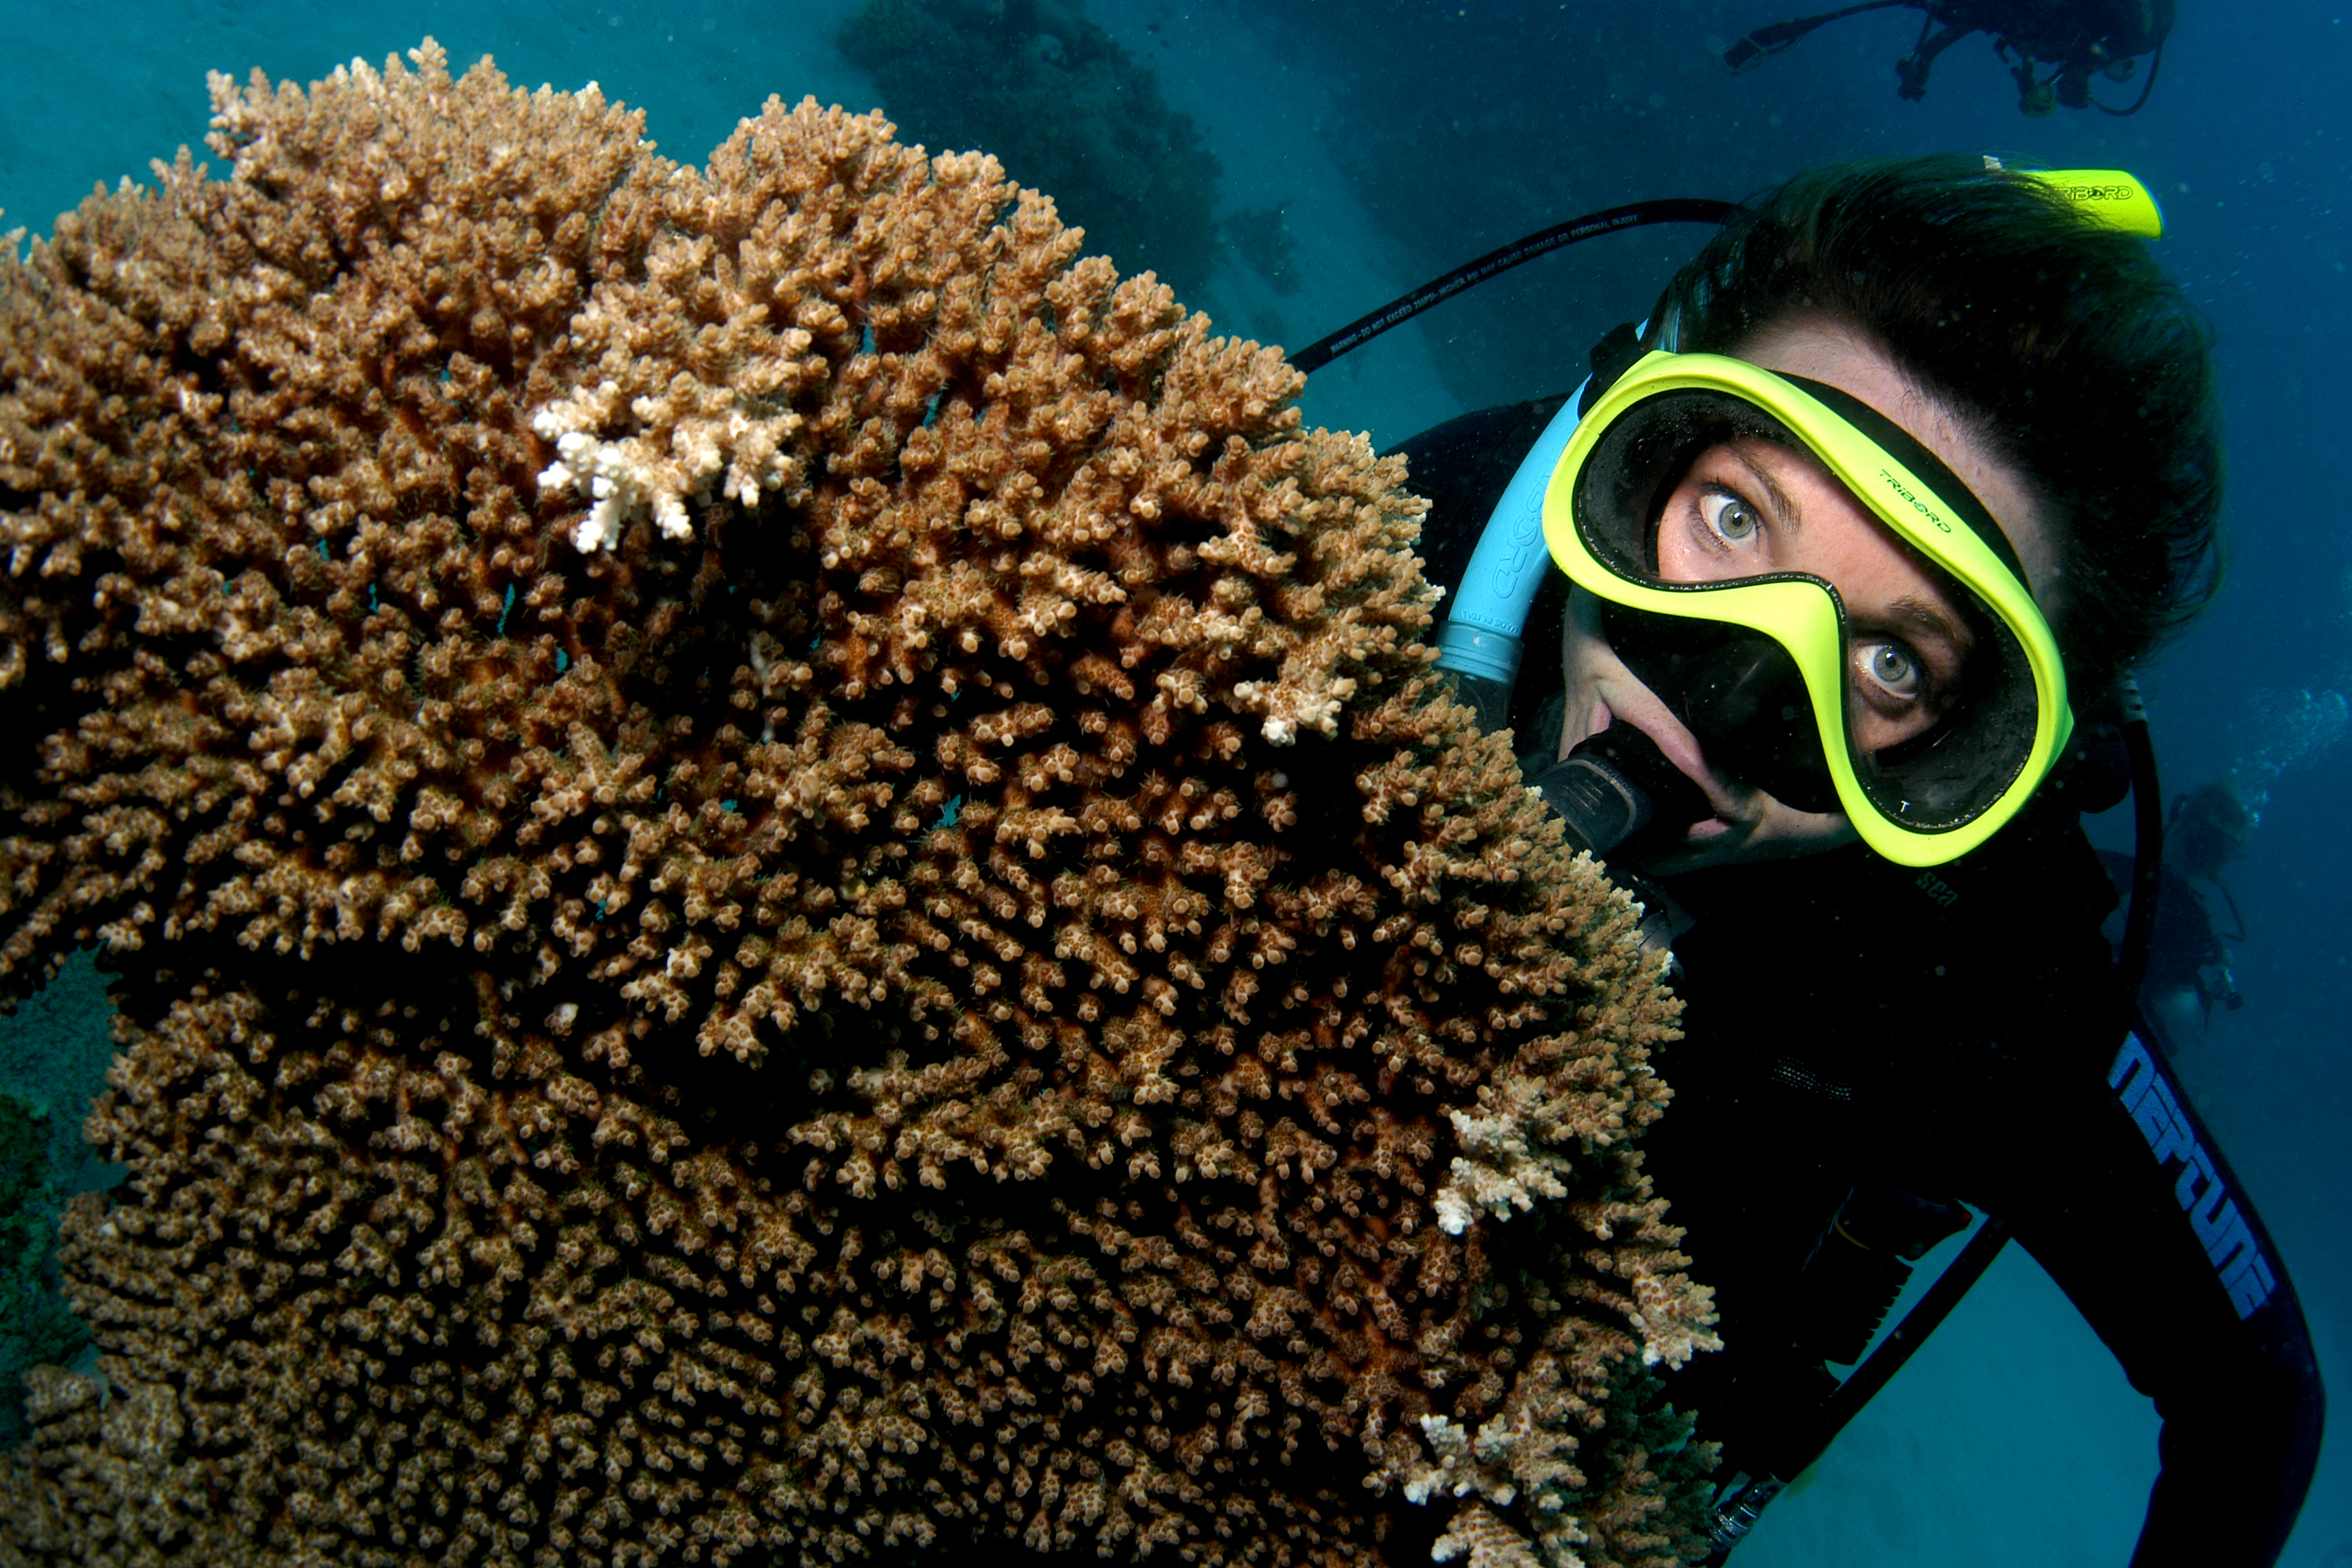 Sara scuba diving in the Philippines